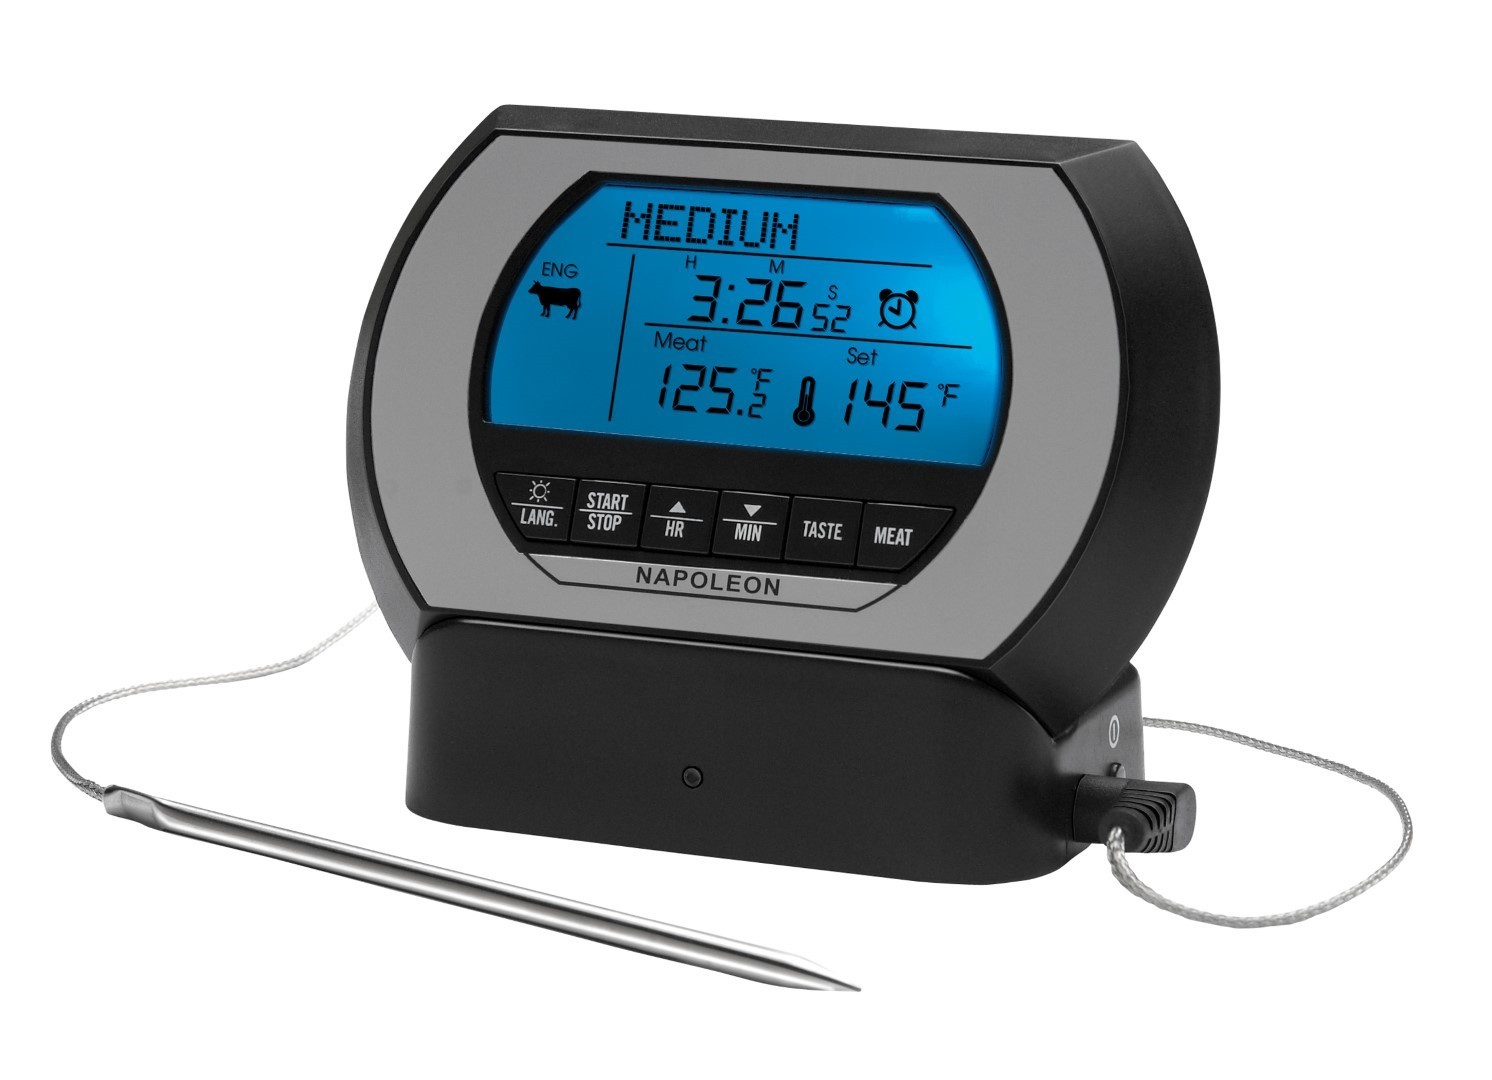 https://www.warentuin.nl/media/catalog/product/1/7/1770629162700063_napoleon_grills_accessoire_pro_draadloze_digitale_thermometer__4198.jpg